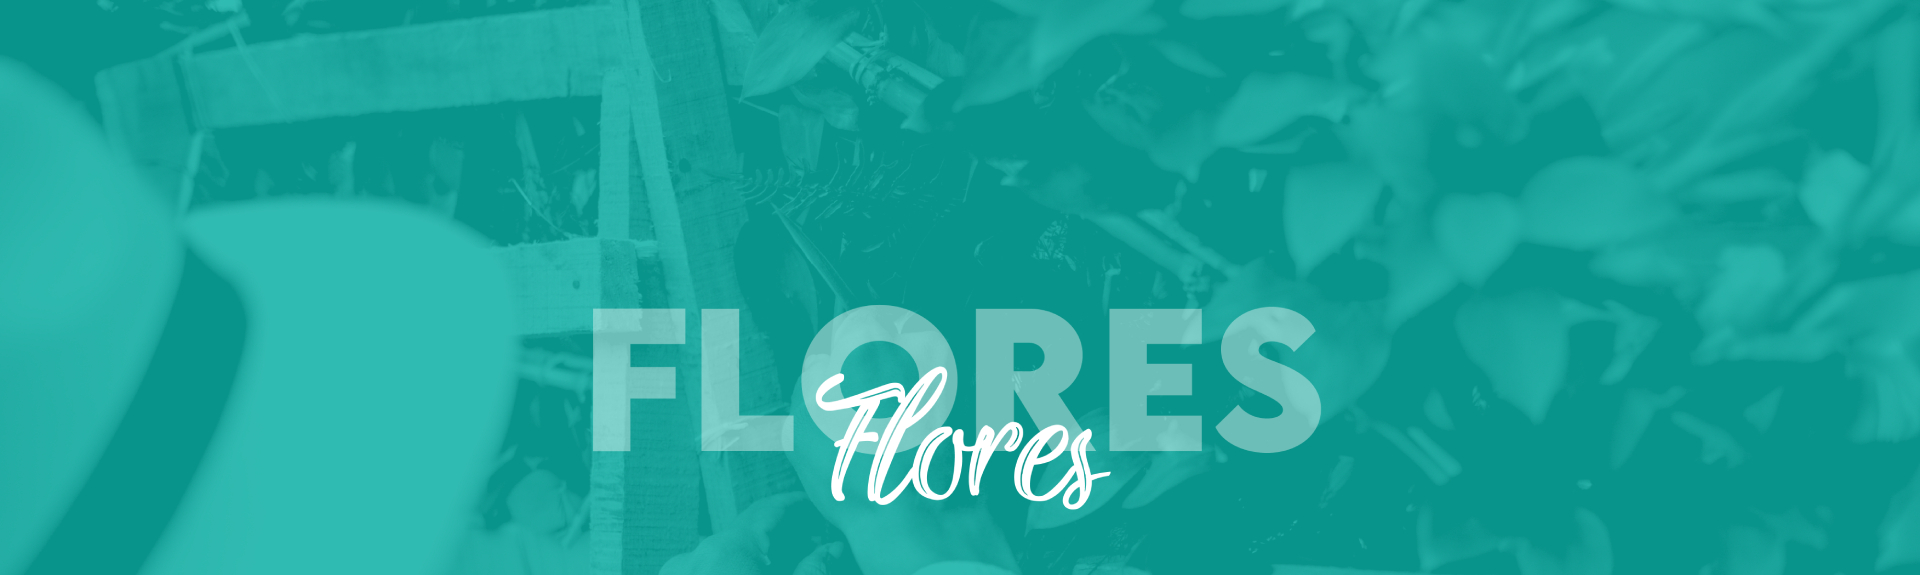 Banner Categoría Flores - Corporación de Silleteros